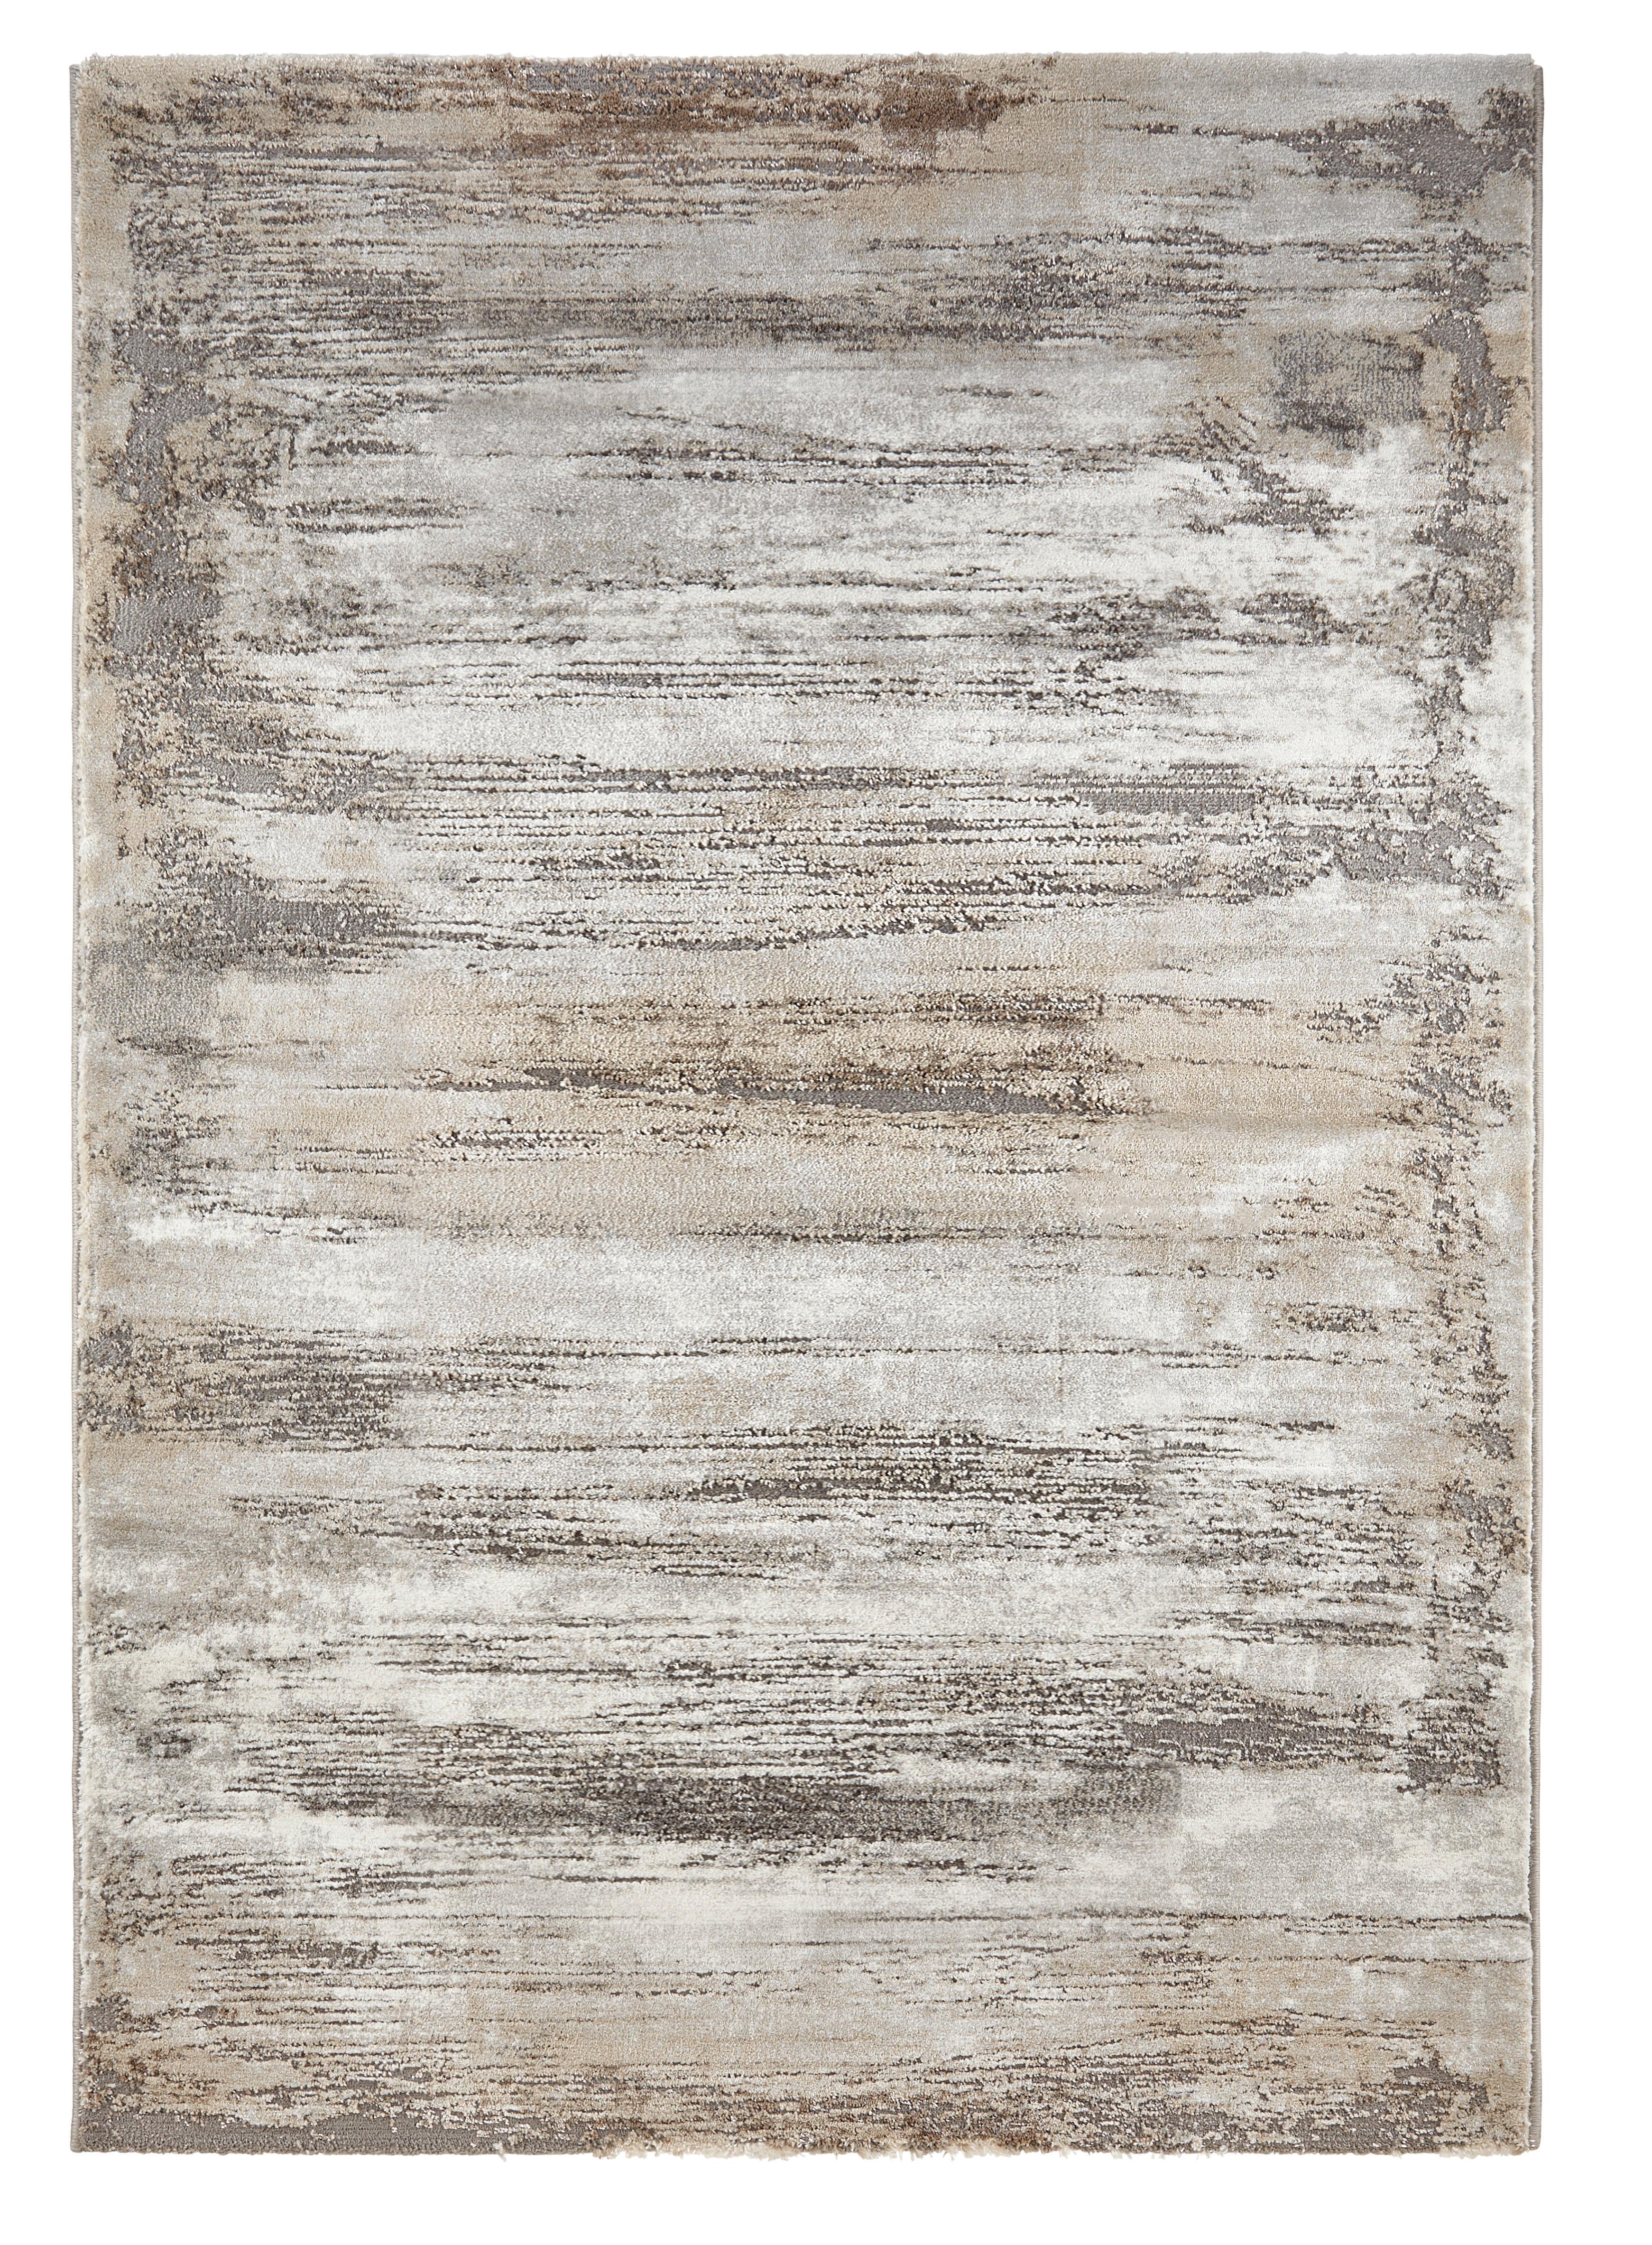 Tkaný Koberec Oxford 1, 80/150cm - šedá/béžová, Basics, textil (80/150cm) - Modern Living